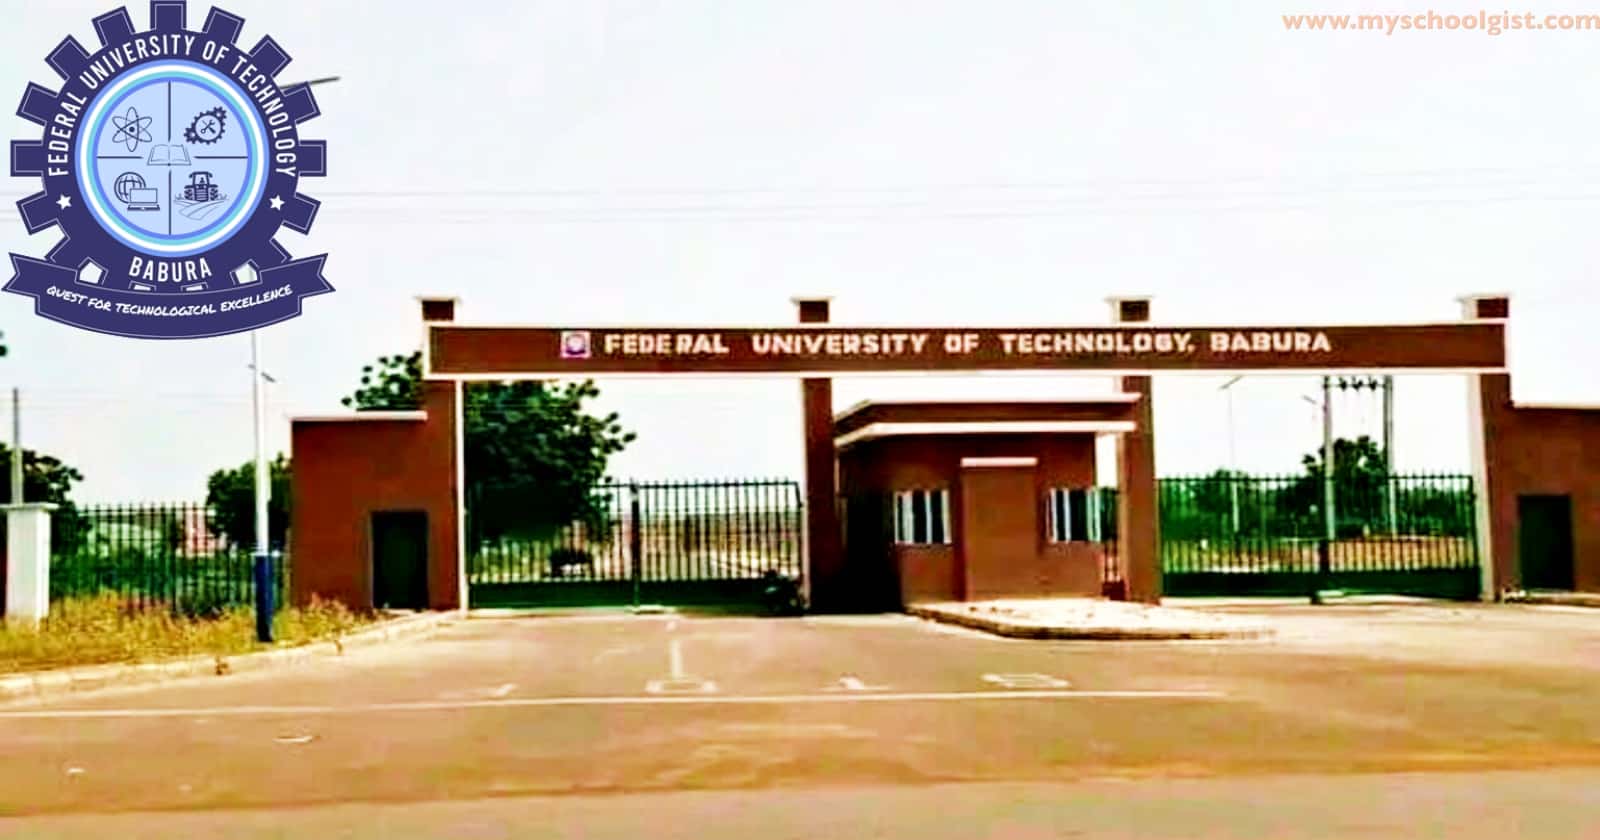 Courses at the Federal University of Technology Babura (FUTB)